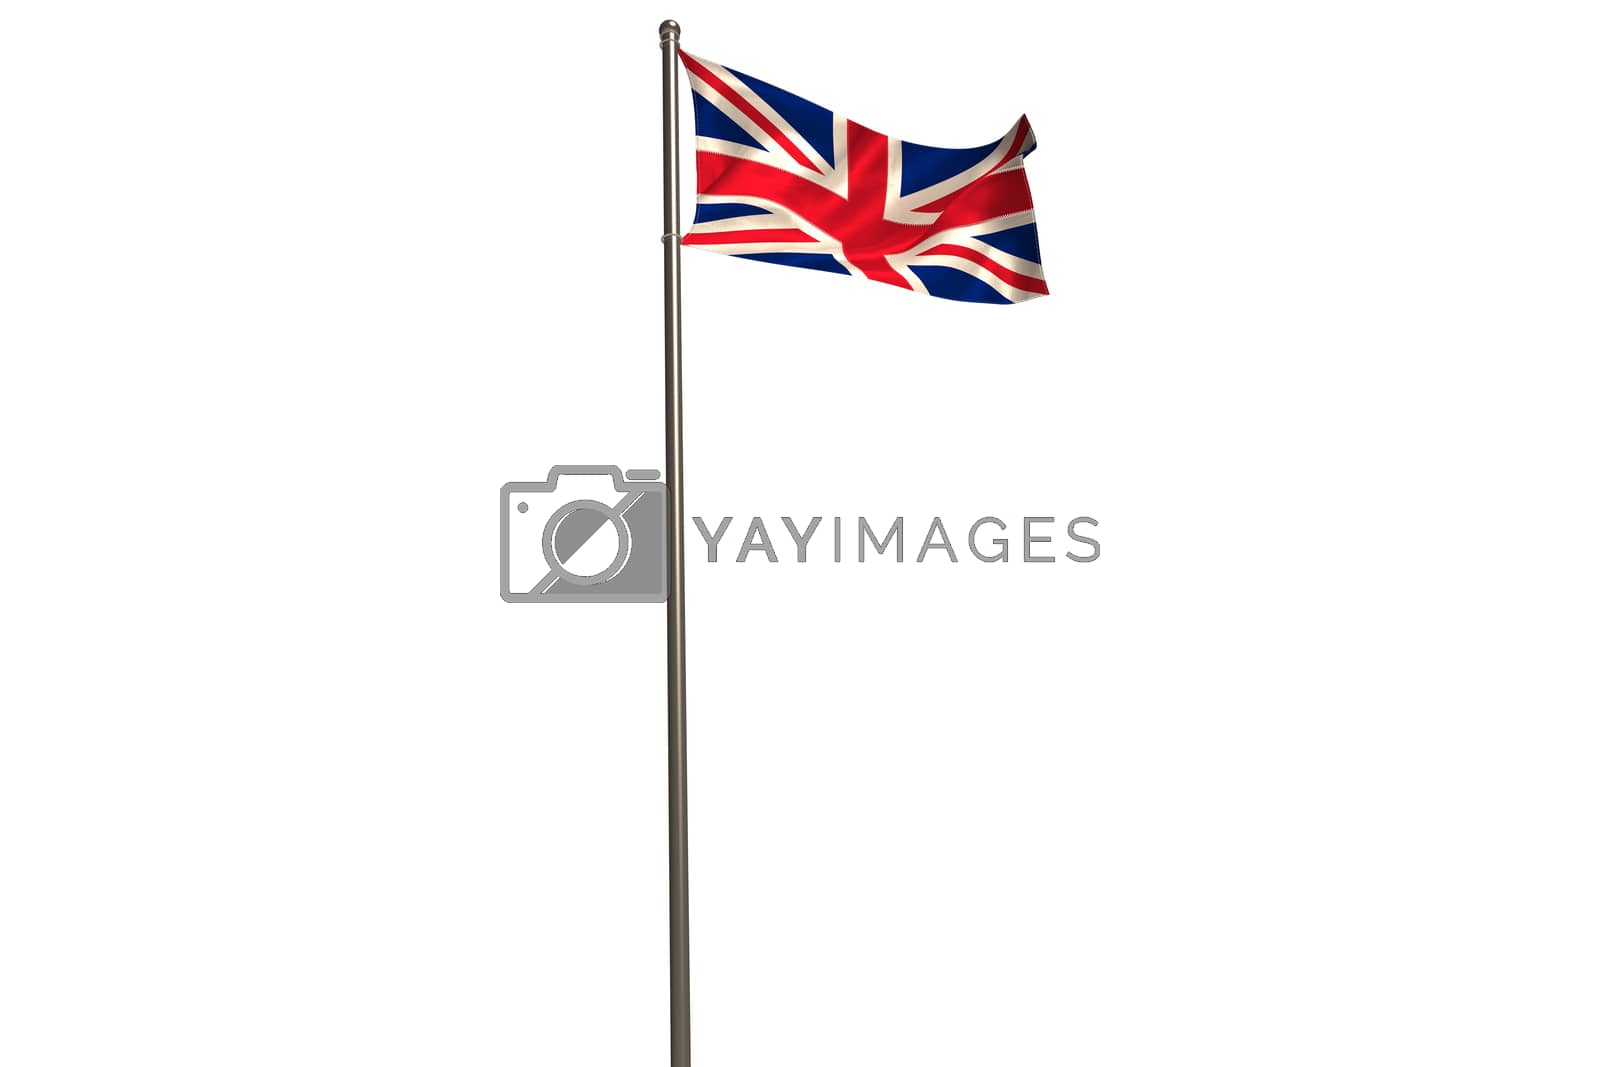 Royalty free image of Great british flag by Wavebreakmedia